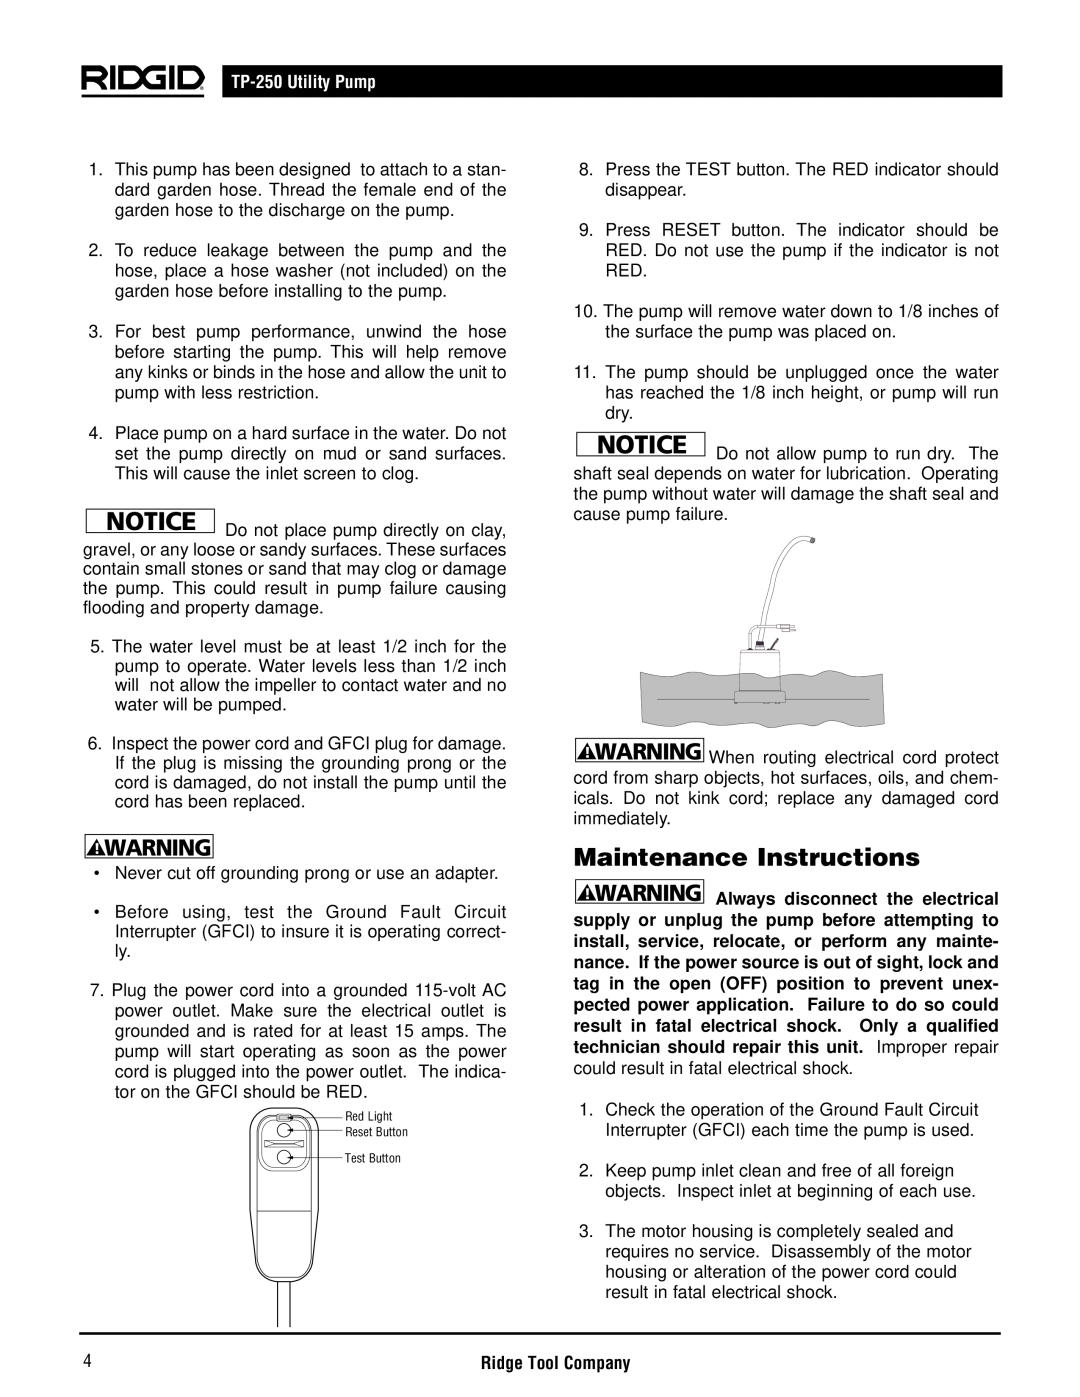 RIDGID manual Maintenance Instructions, TP-250Utility Pump 